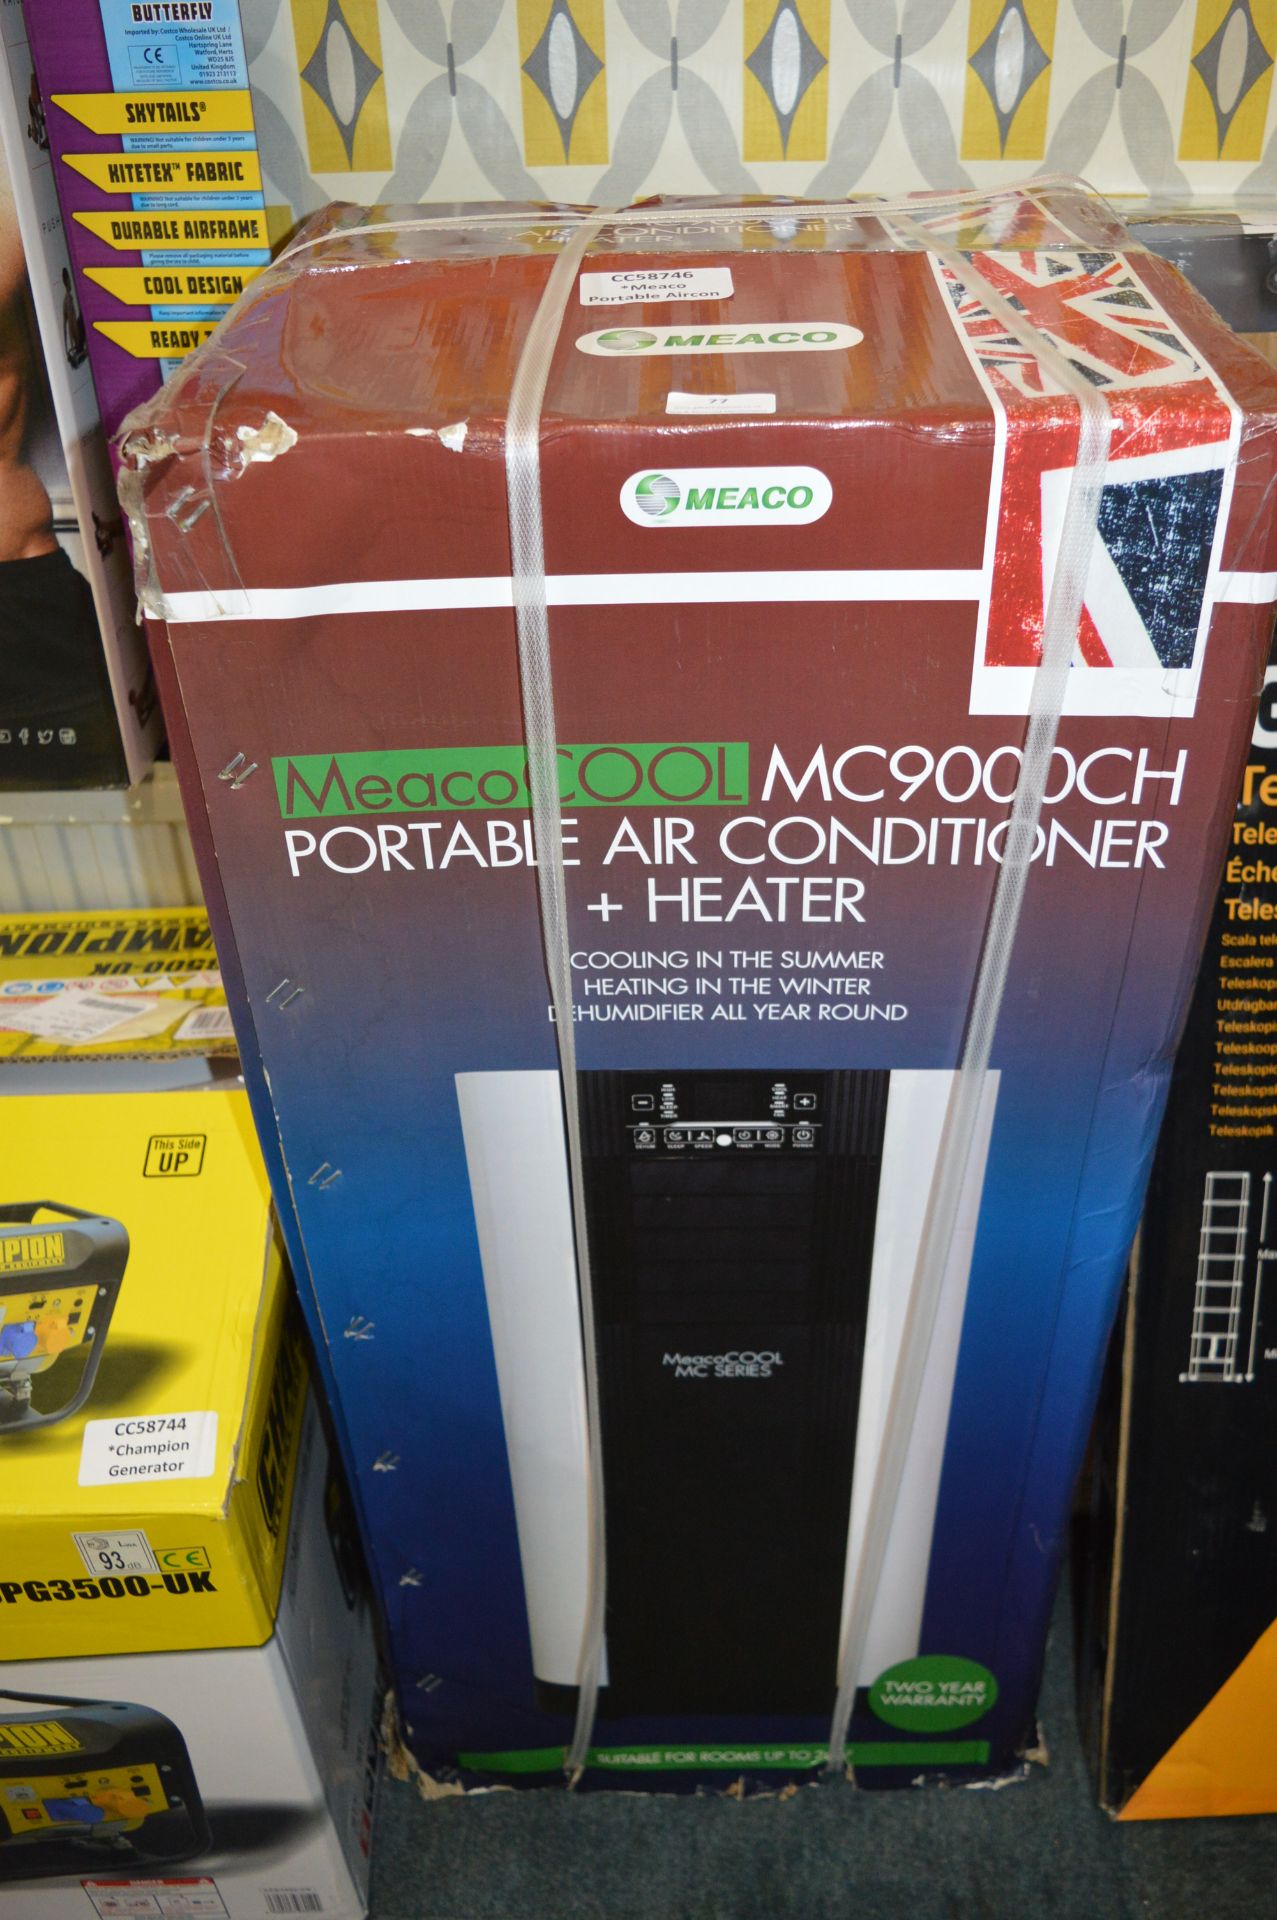 *Meaco Portable Air Conditioner/Heater